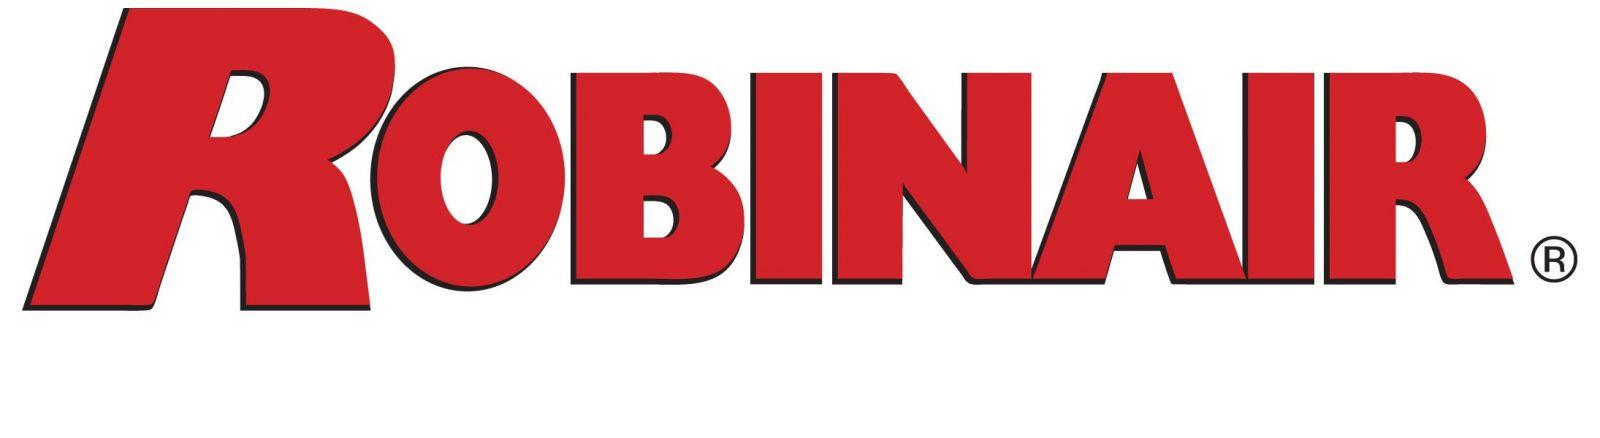 Robinair Logo - robinair - H&P Technologies